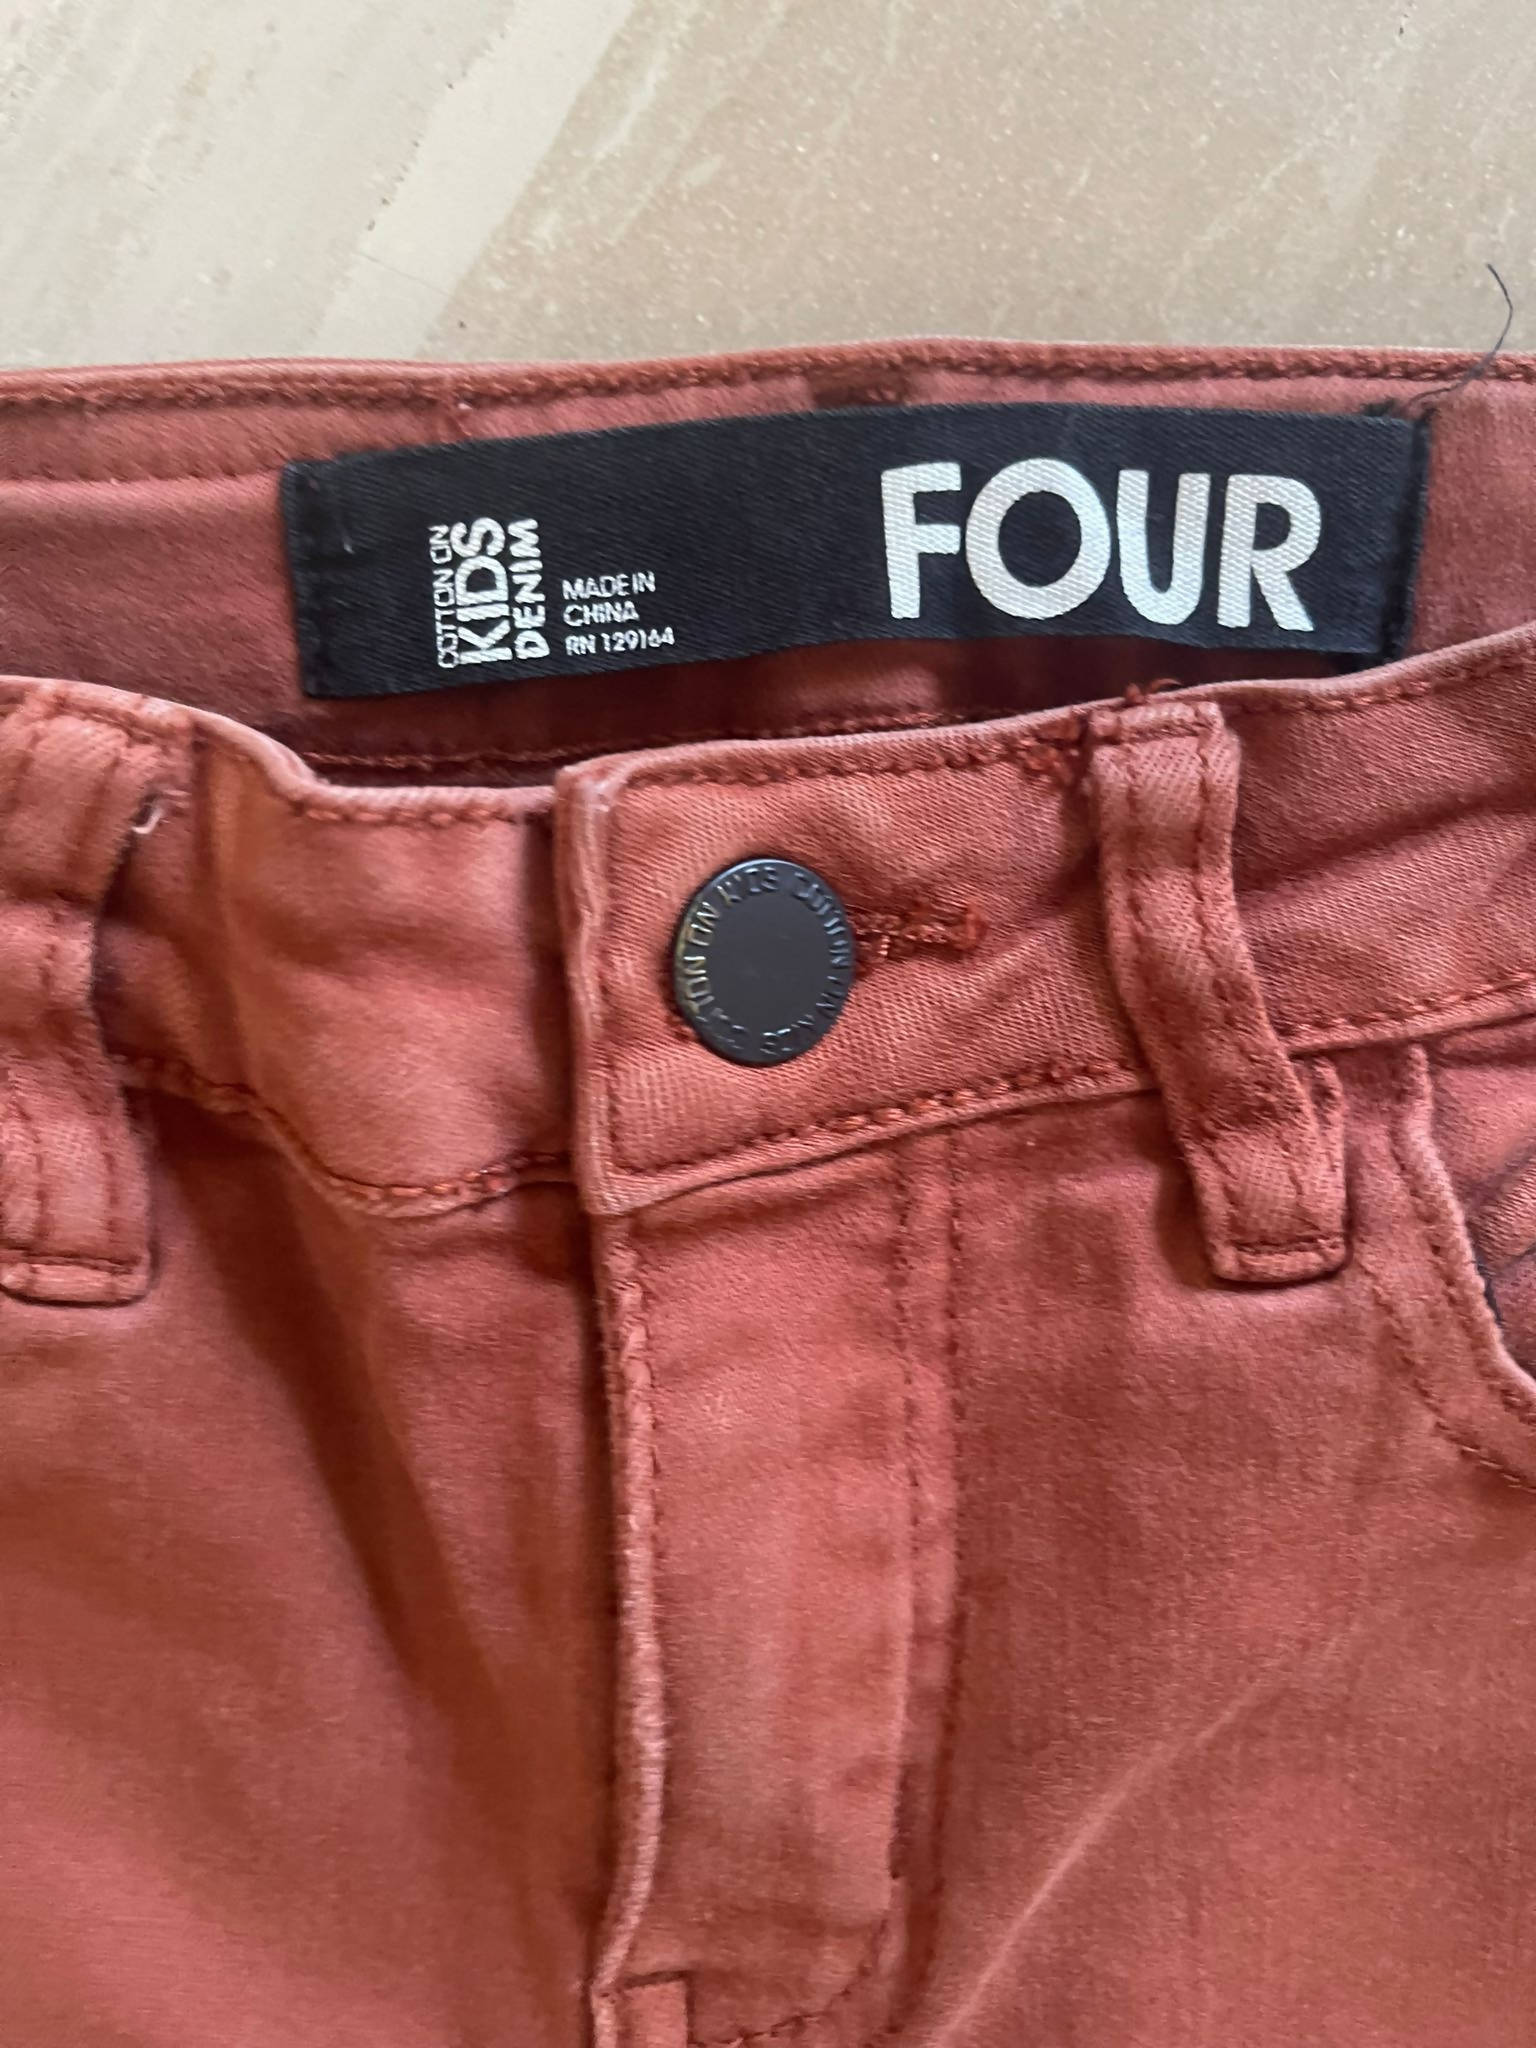 Rust Denim Jeans | Boys Bottoms & Pants | Preloved